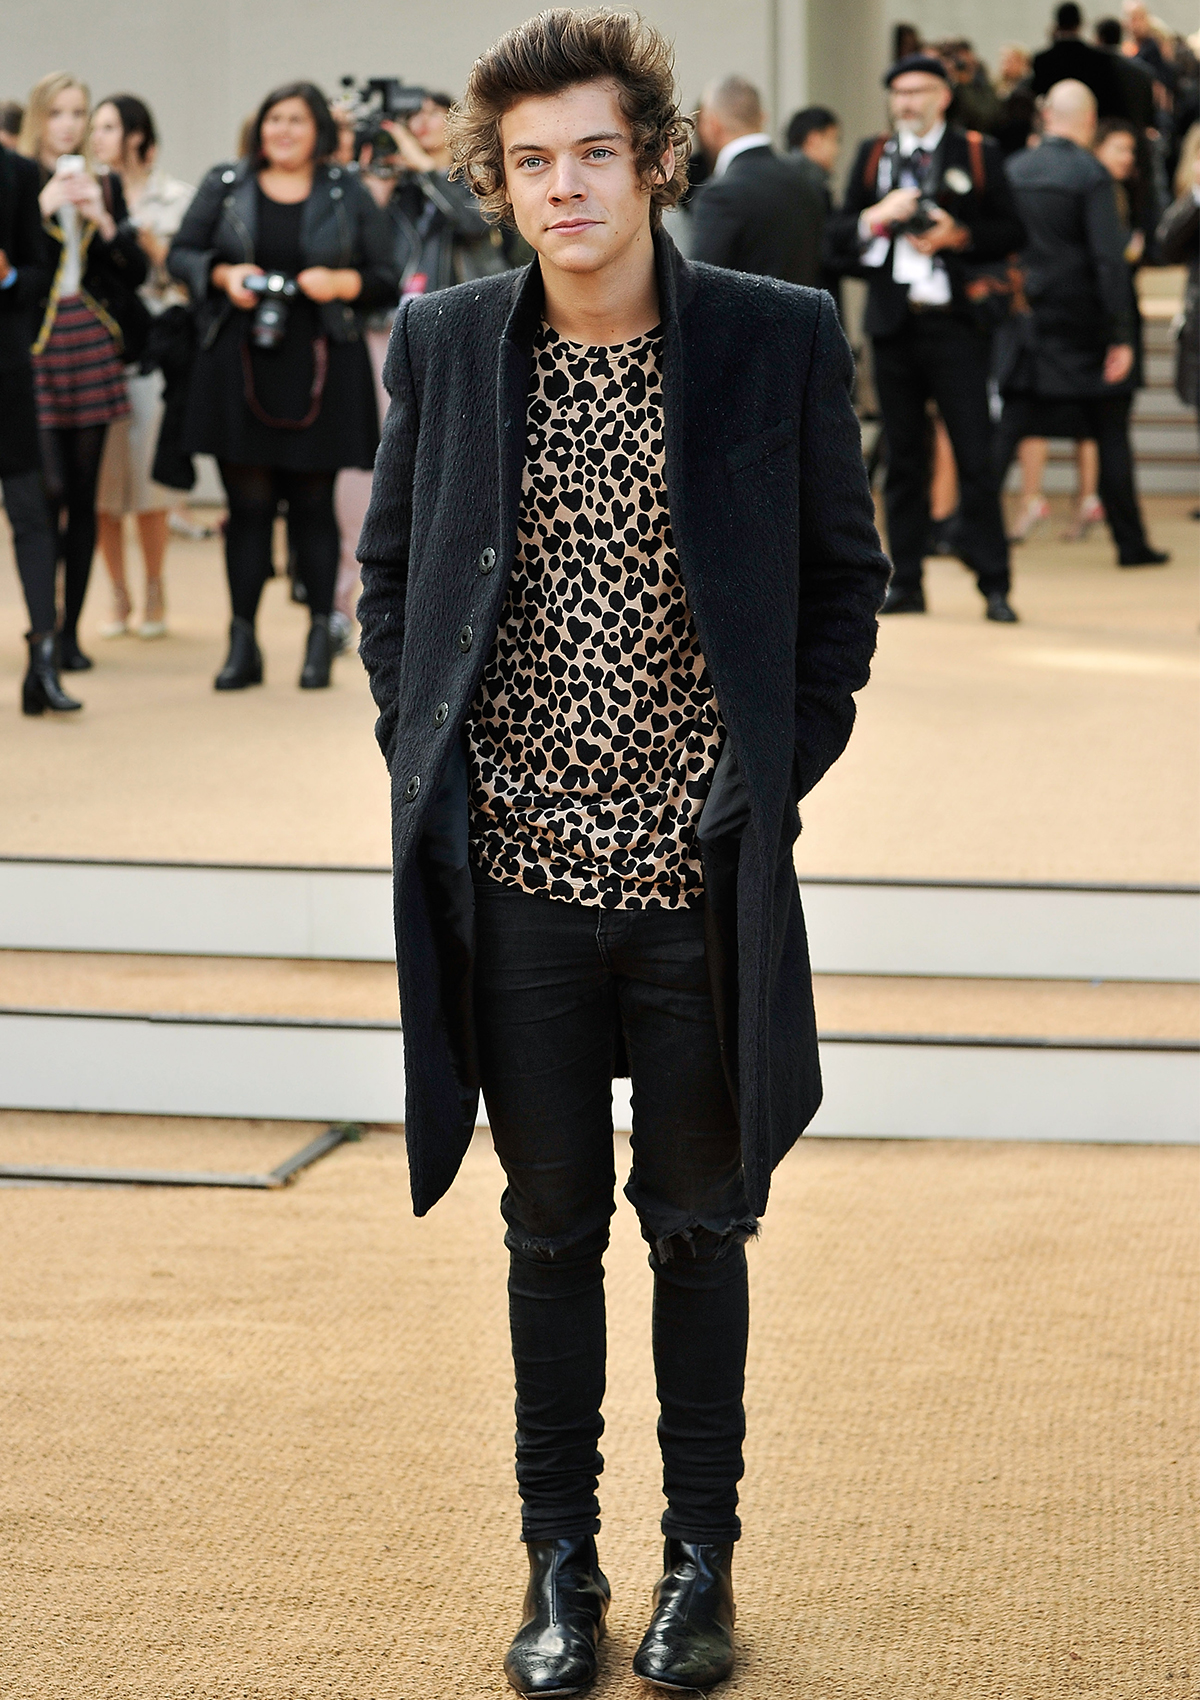 Harry Styles fashion evolution